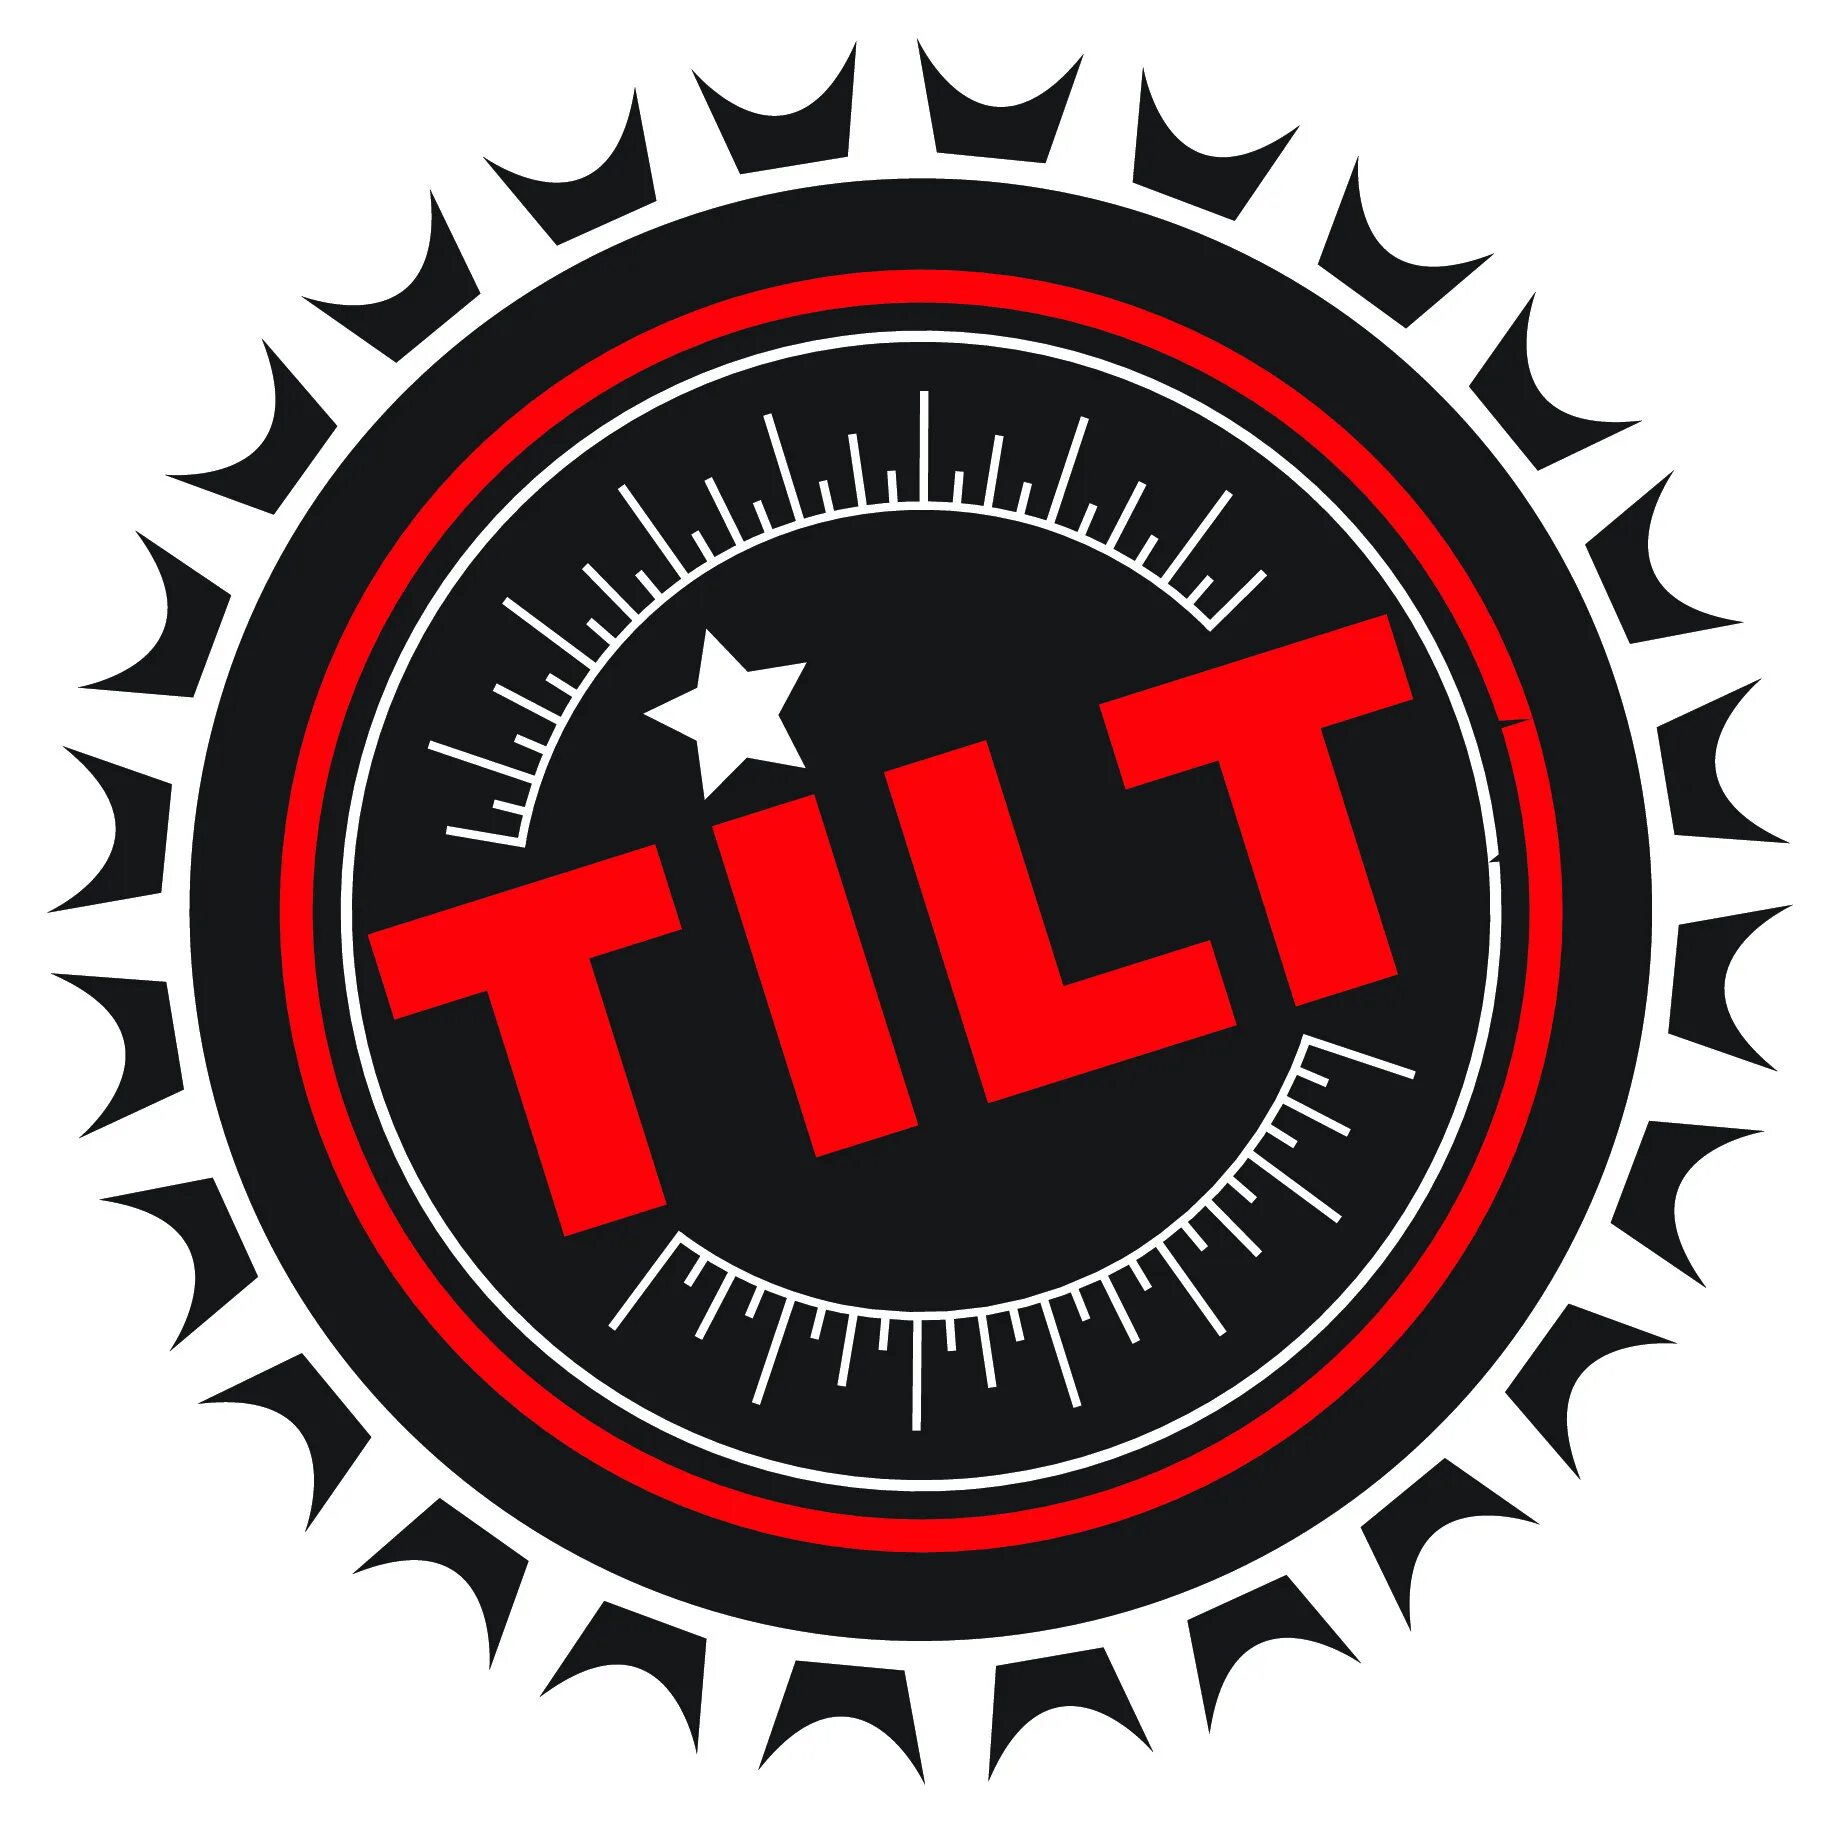 Тильт. Full Tilt логотип. Надпись тильт. Тильт авы.